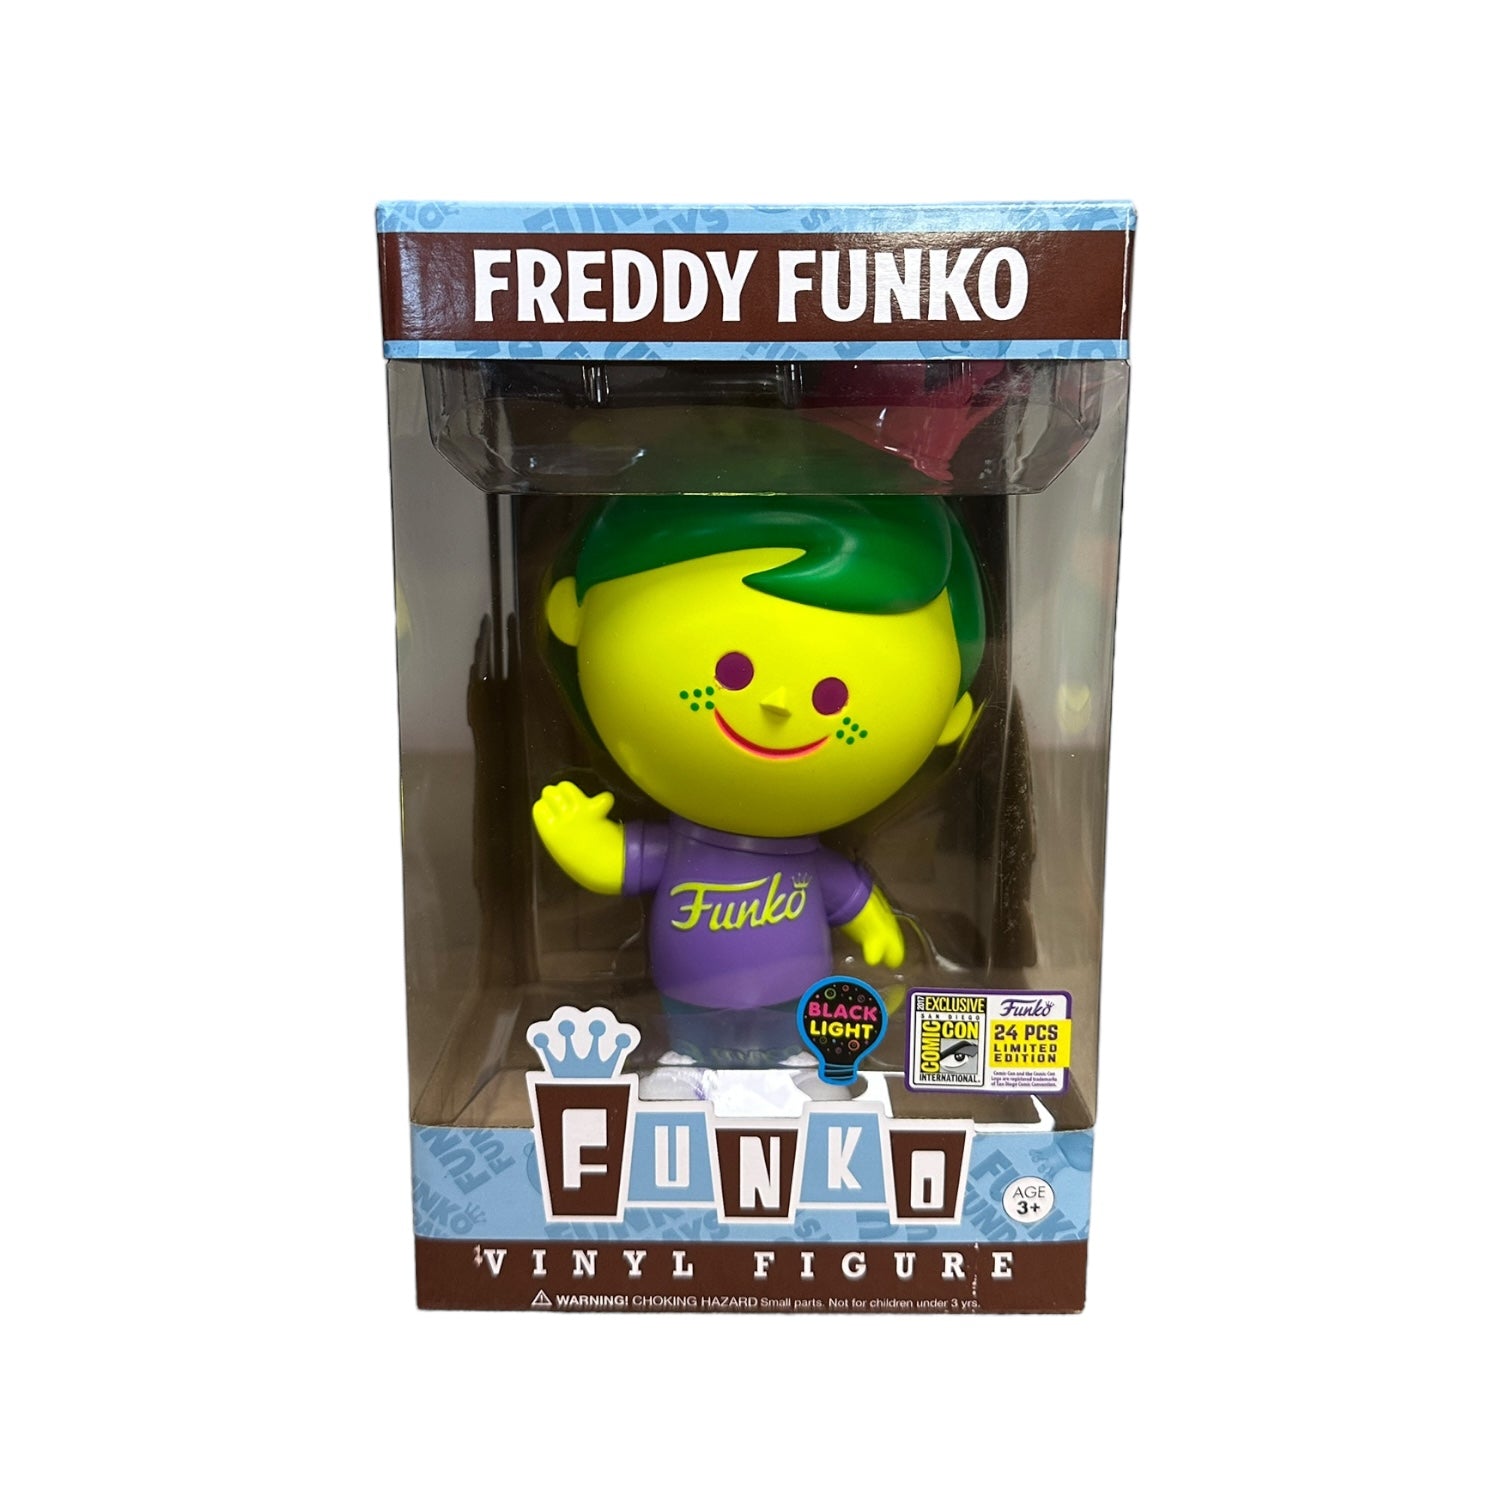 Freddy Funko Black Light (Yellow & Purple) Retro Vinyl Figure! - SDCC 2017 Exclusive LE24 Pcs - Condition 8.75/10